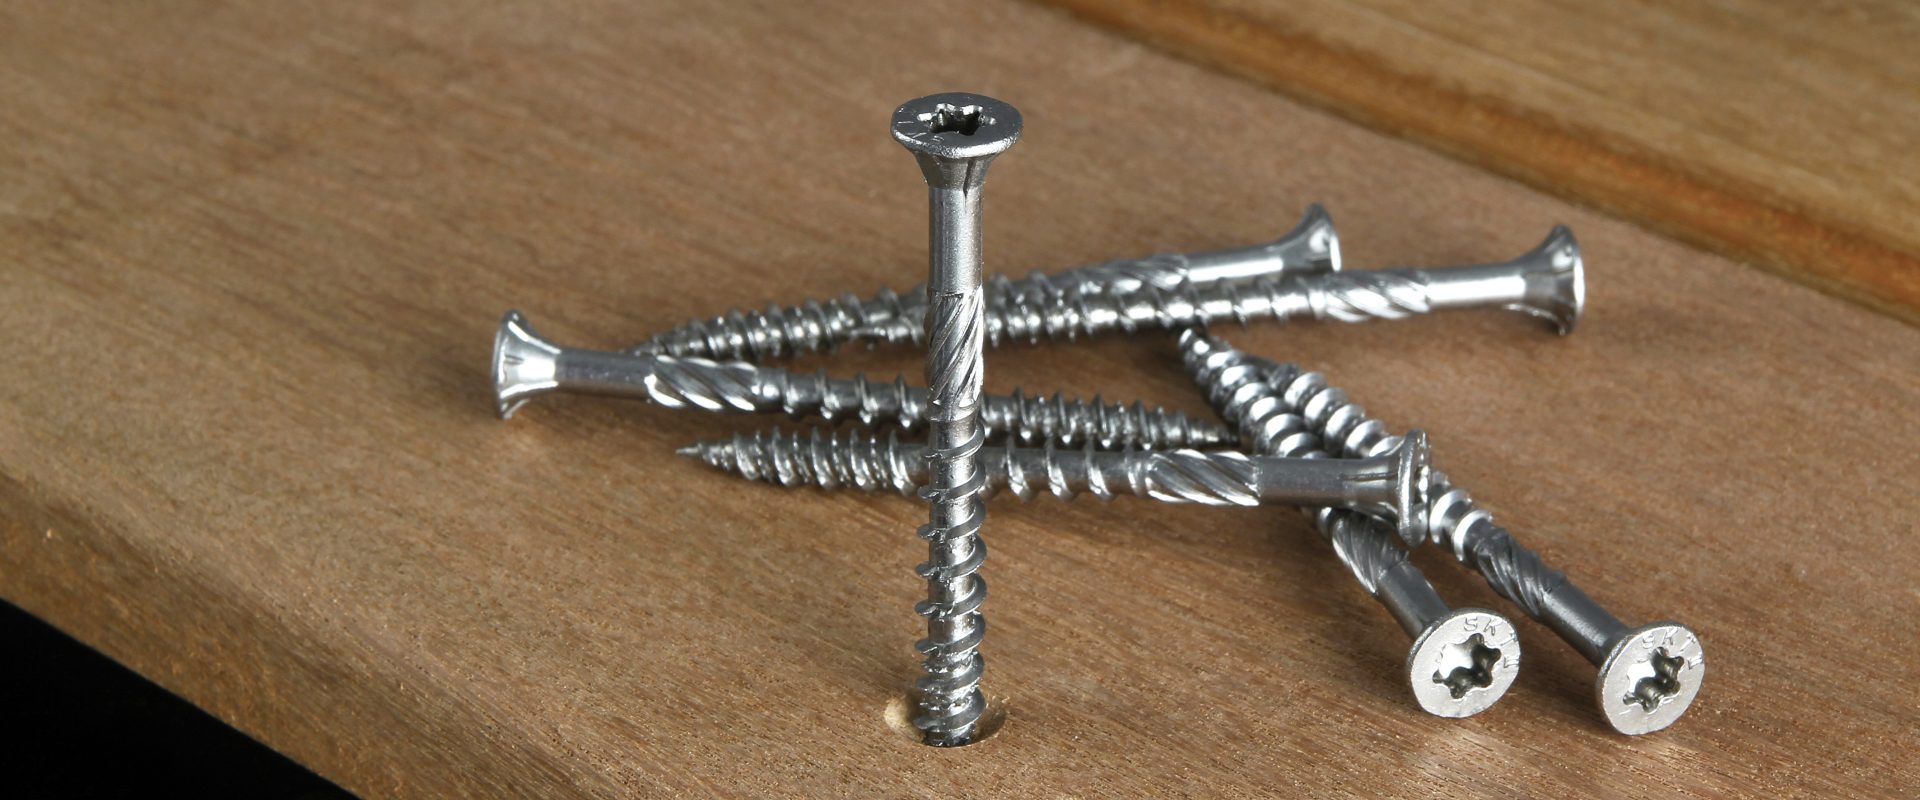 Stainless steel screws for wood joists - Felixwood